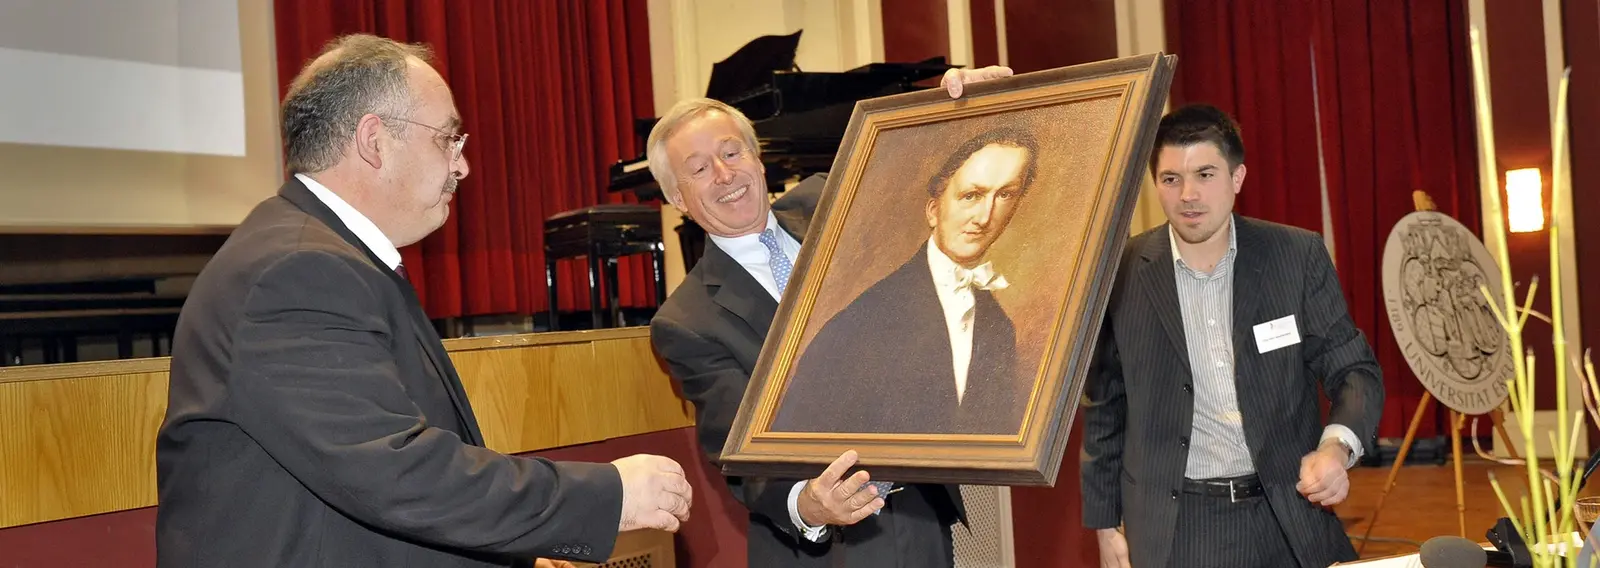 Franz Markus Haniel holding a framed painting of Franz Haniel